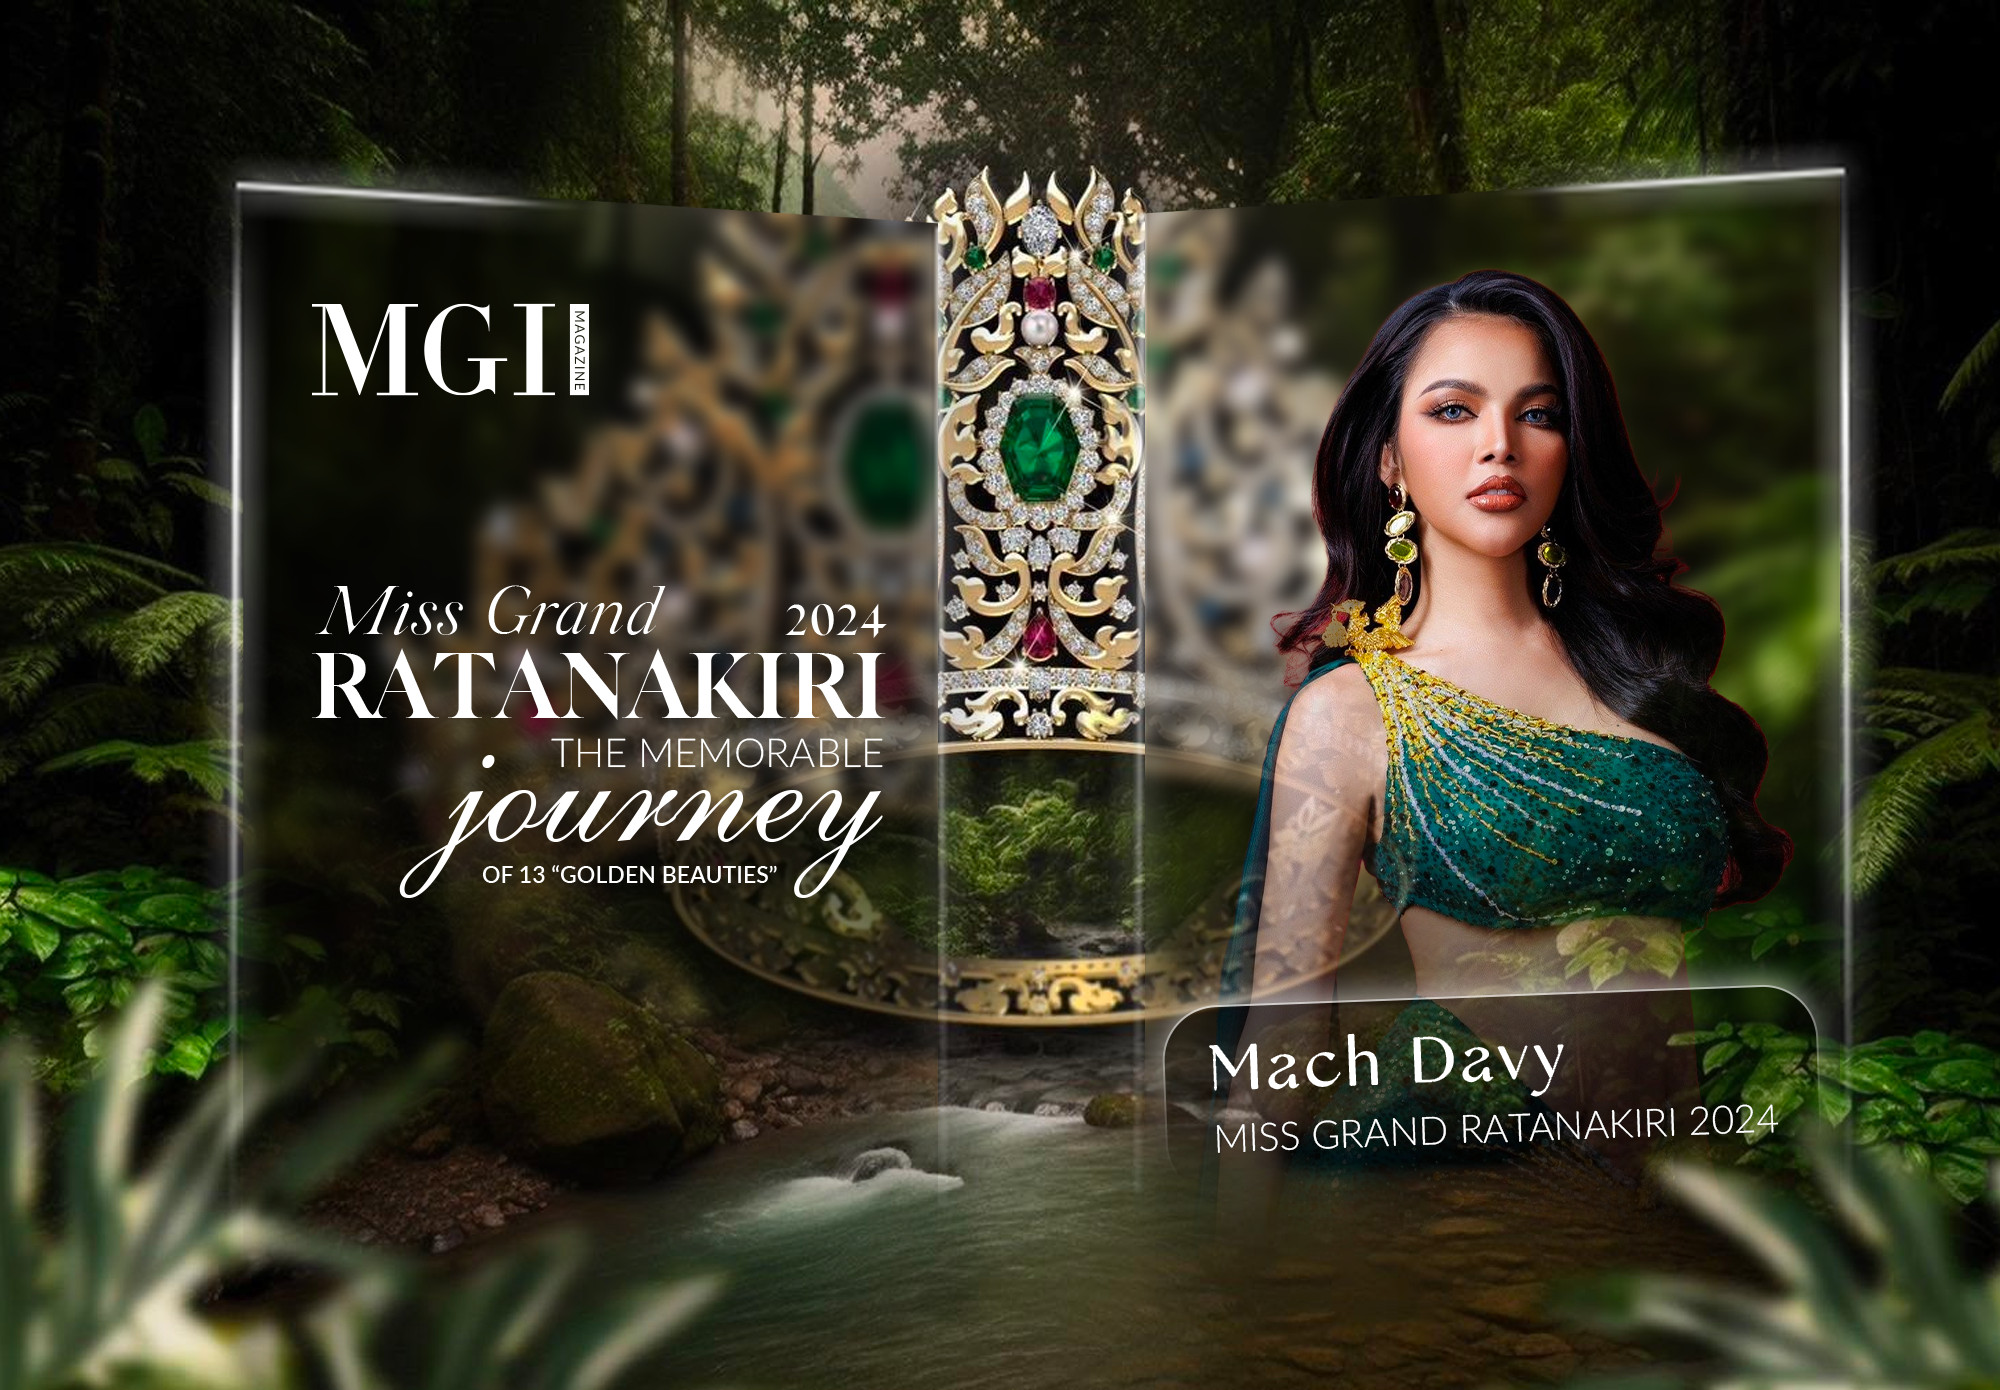 Miss Grand Ratanakiri 2024 - the memorable journey of 13 “golden beauties”